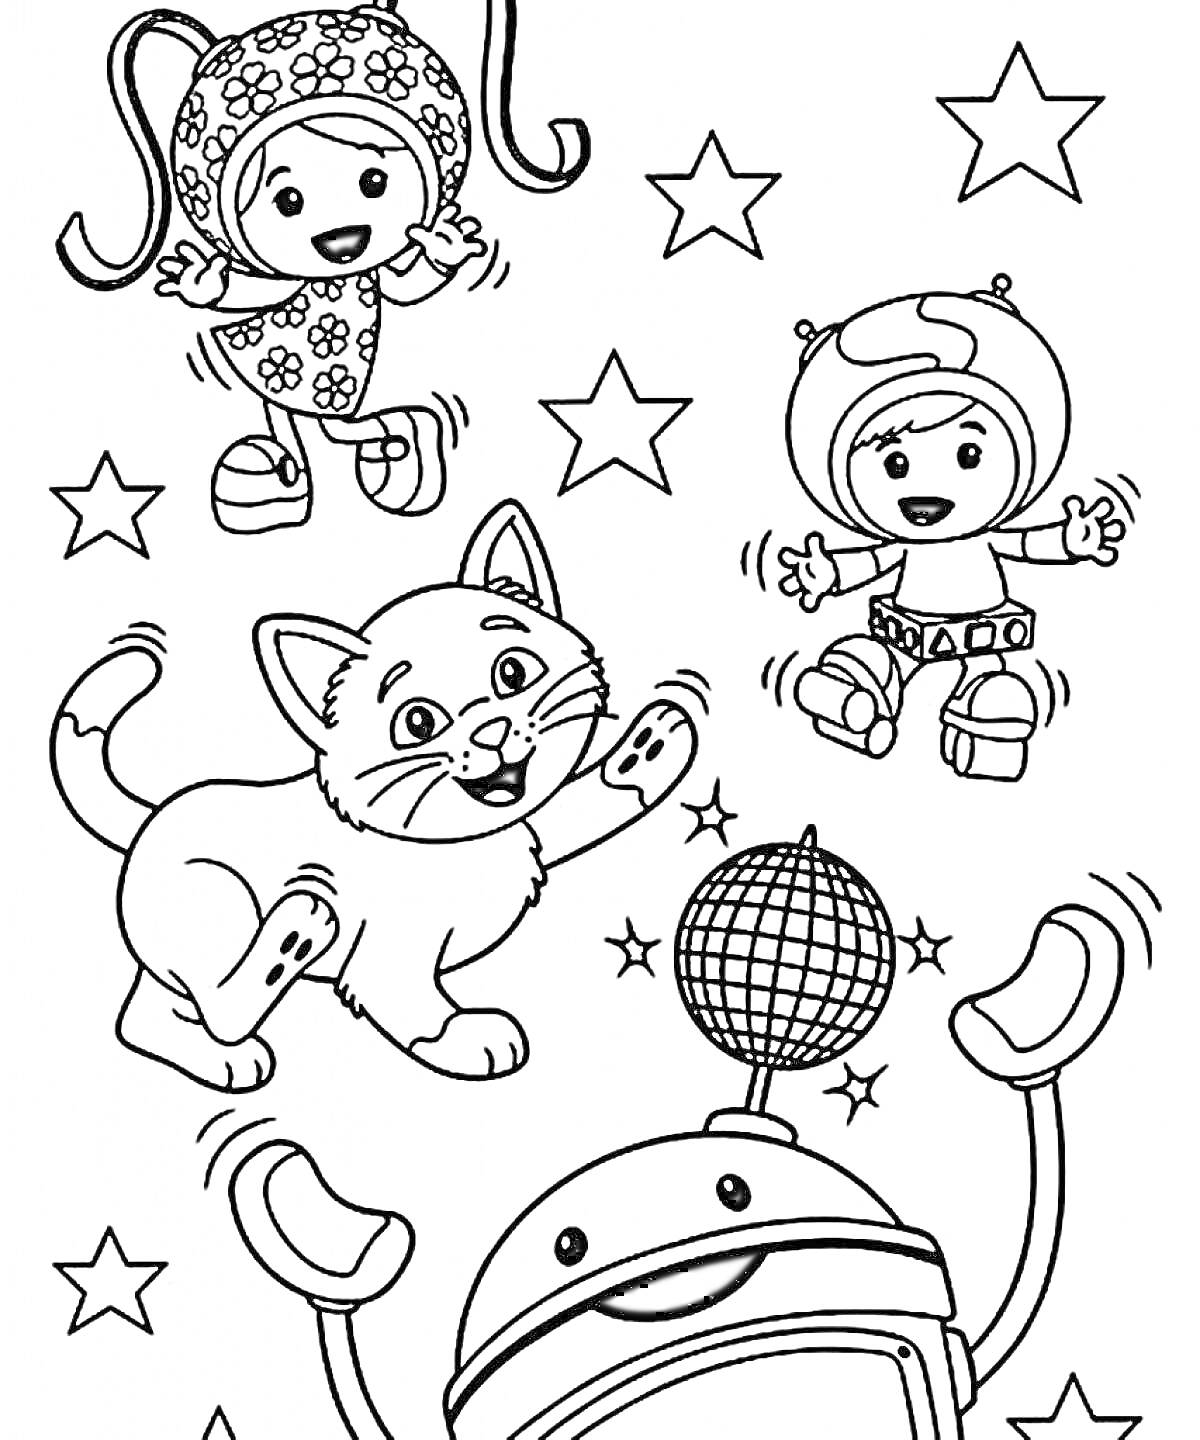 Раскраска Герои Умизуми с котенком и звездочками